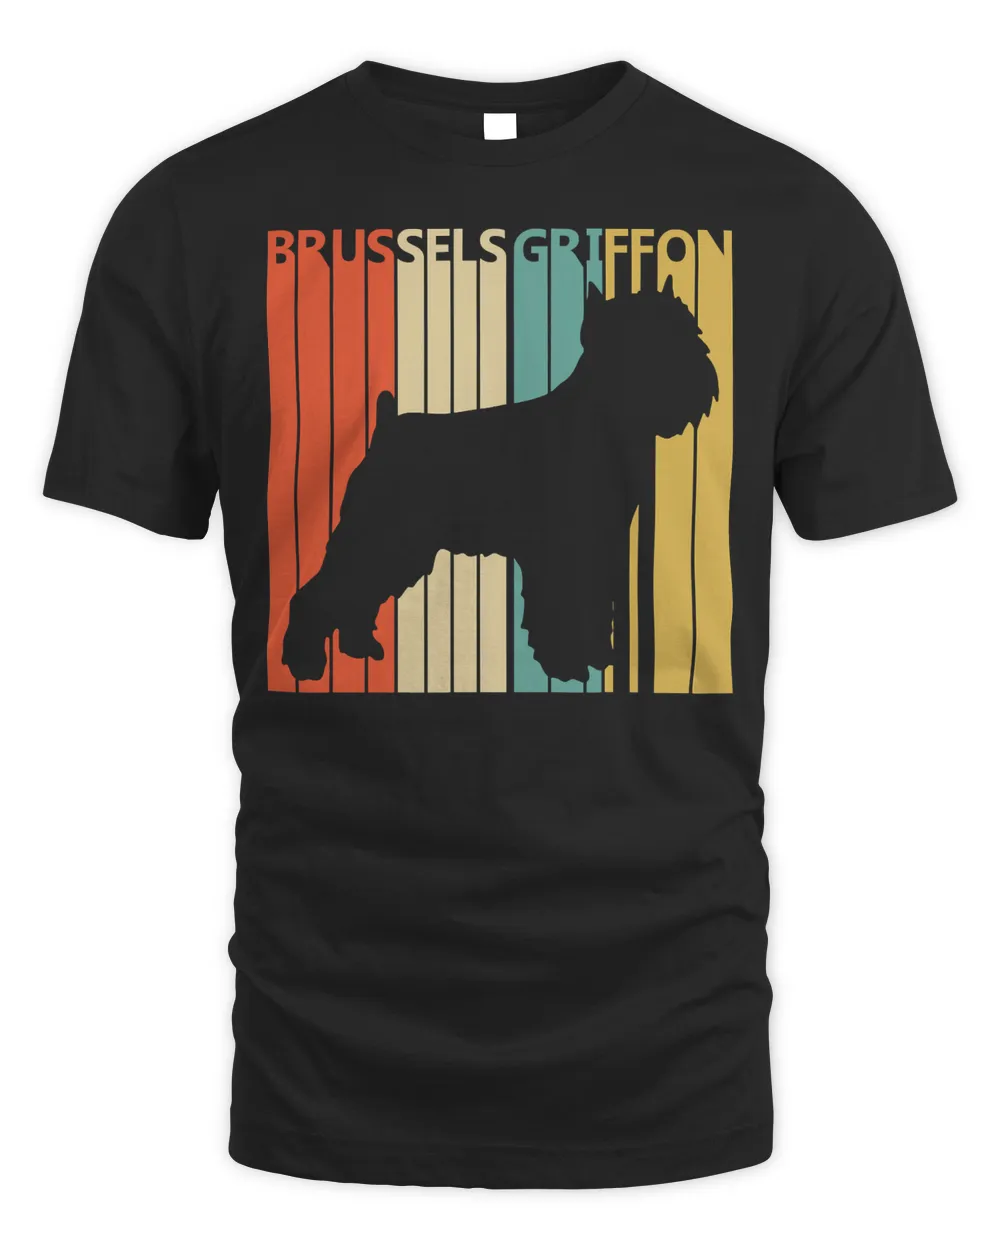 Vintage Retro Brussels Griffon Dog T-shirt